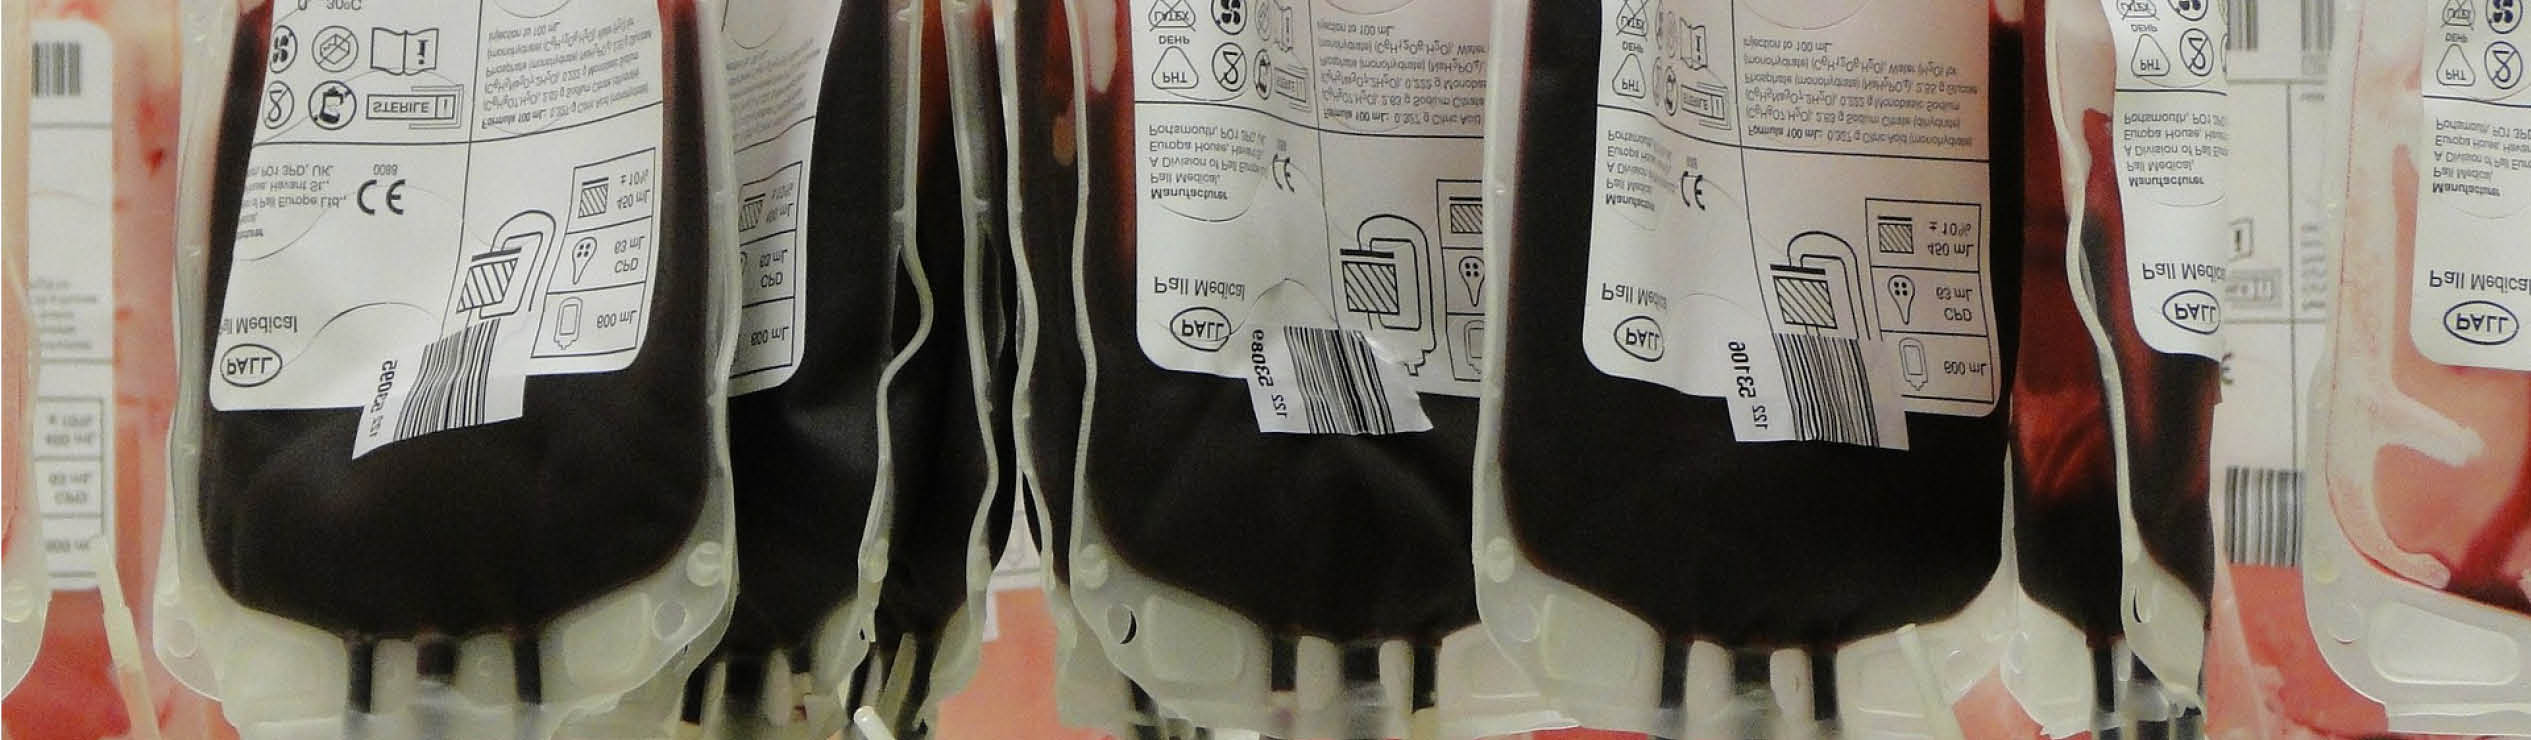 transfusion image